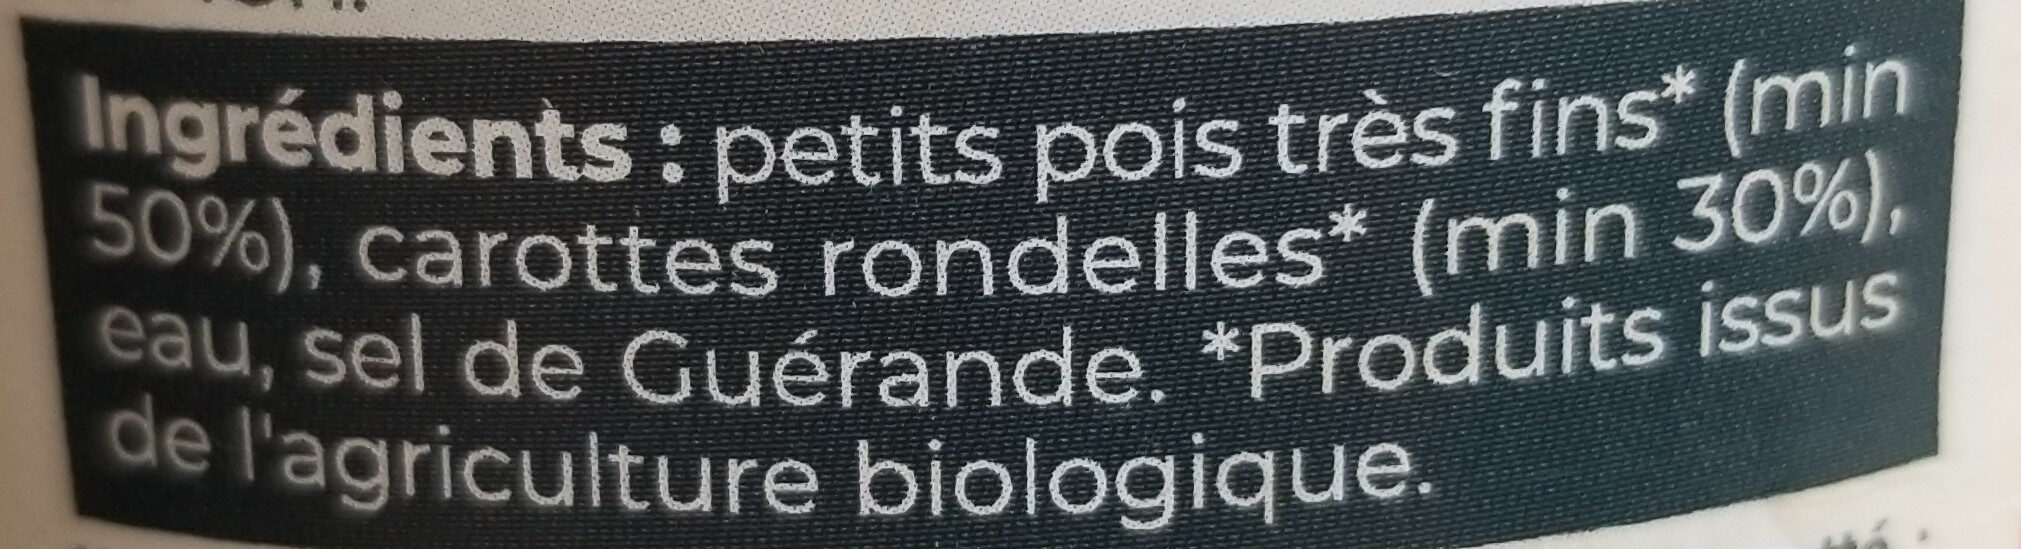 Petits Pois Très Fins & Carottes Rondelles France Bio - Ingrediënten - fr